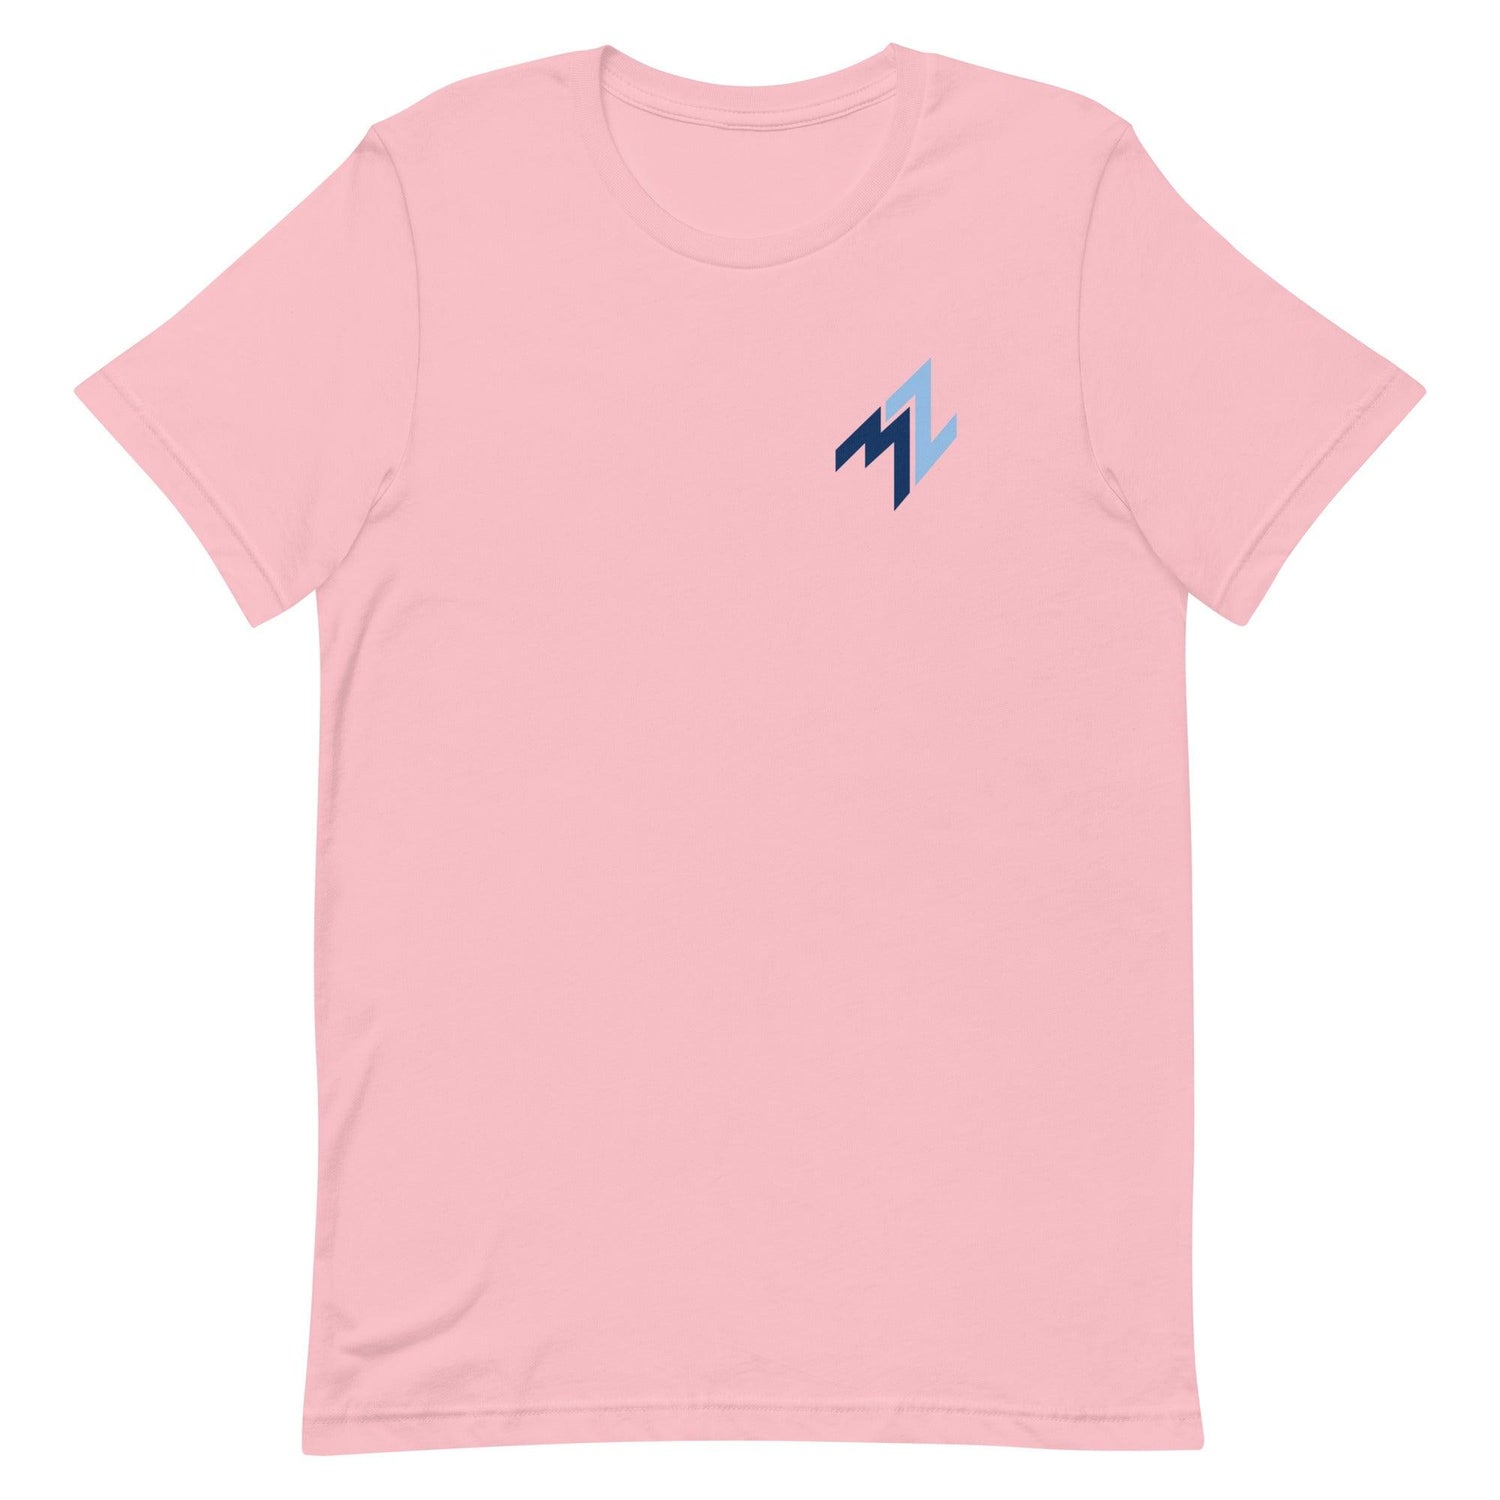 Mike Zunino "Essential" t-shirt - Fan Arch